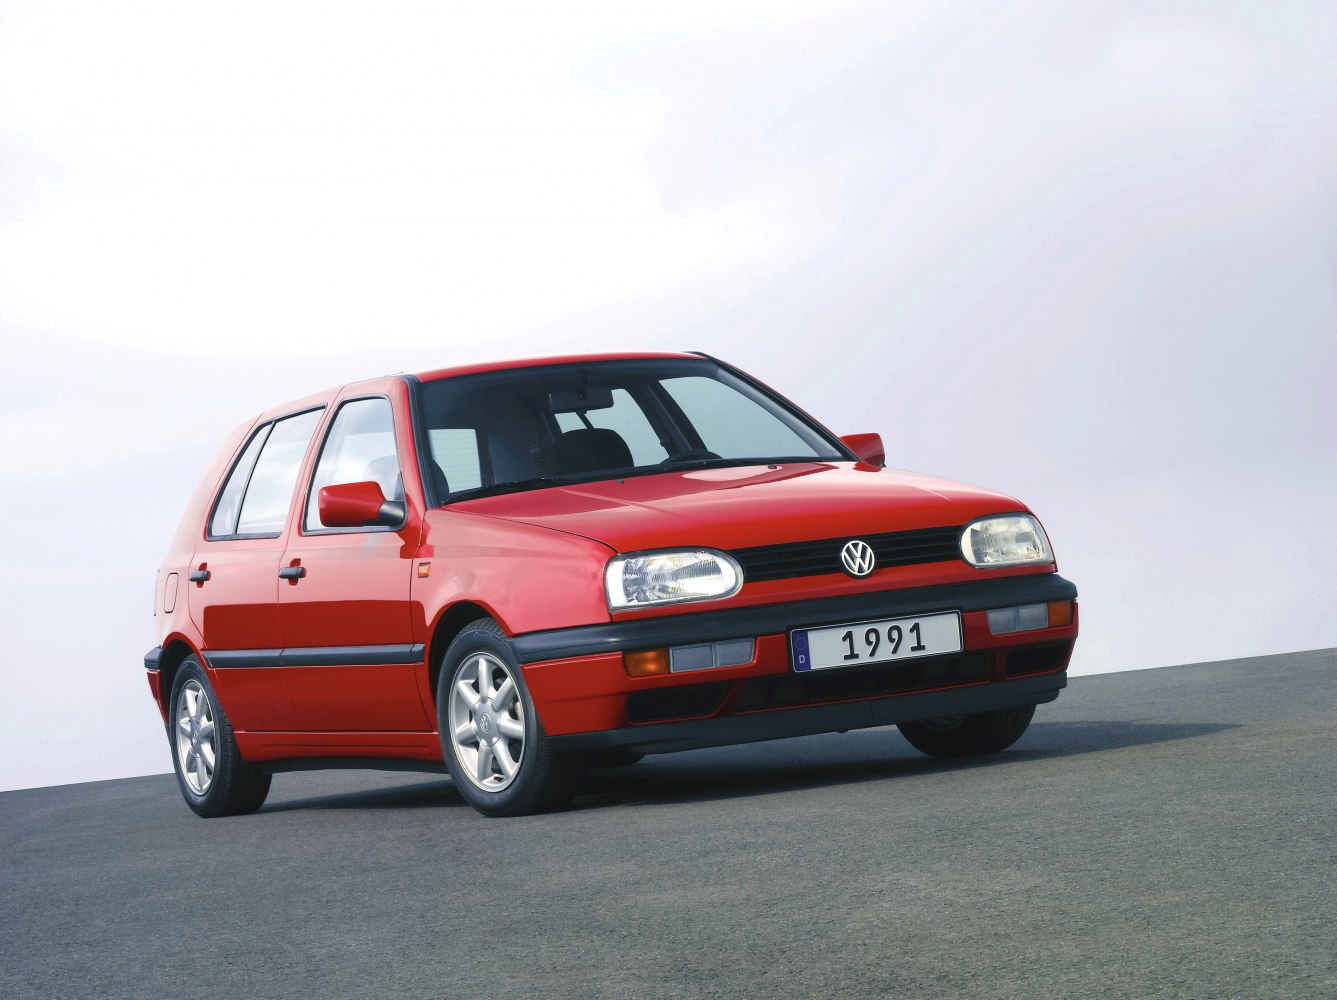 1991 Volkswagen Golf III 2.0 (115 Hp)  Technical specs, data, fuel  consumption, Dimensions